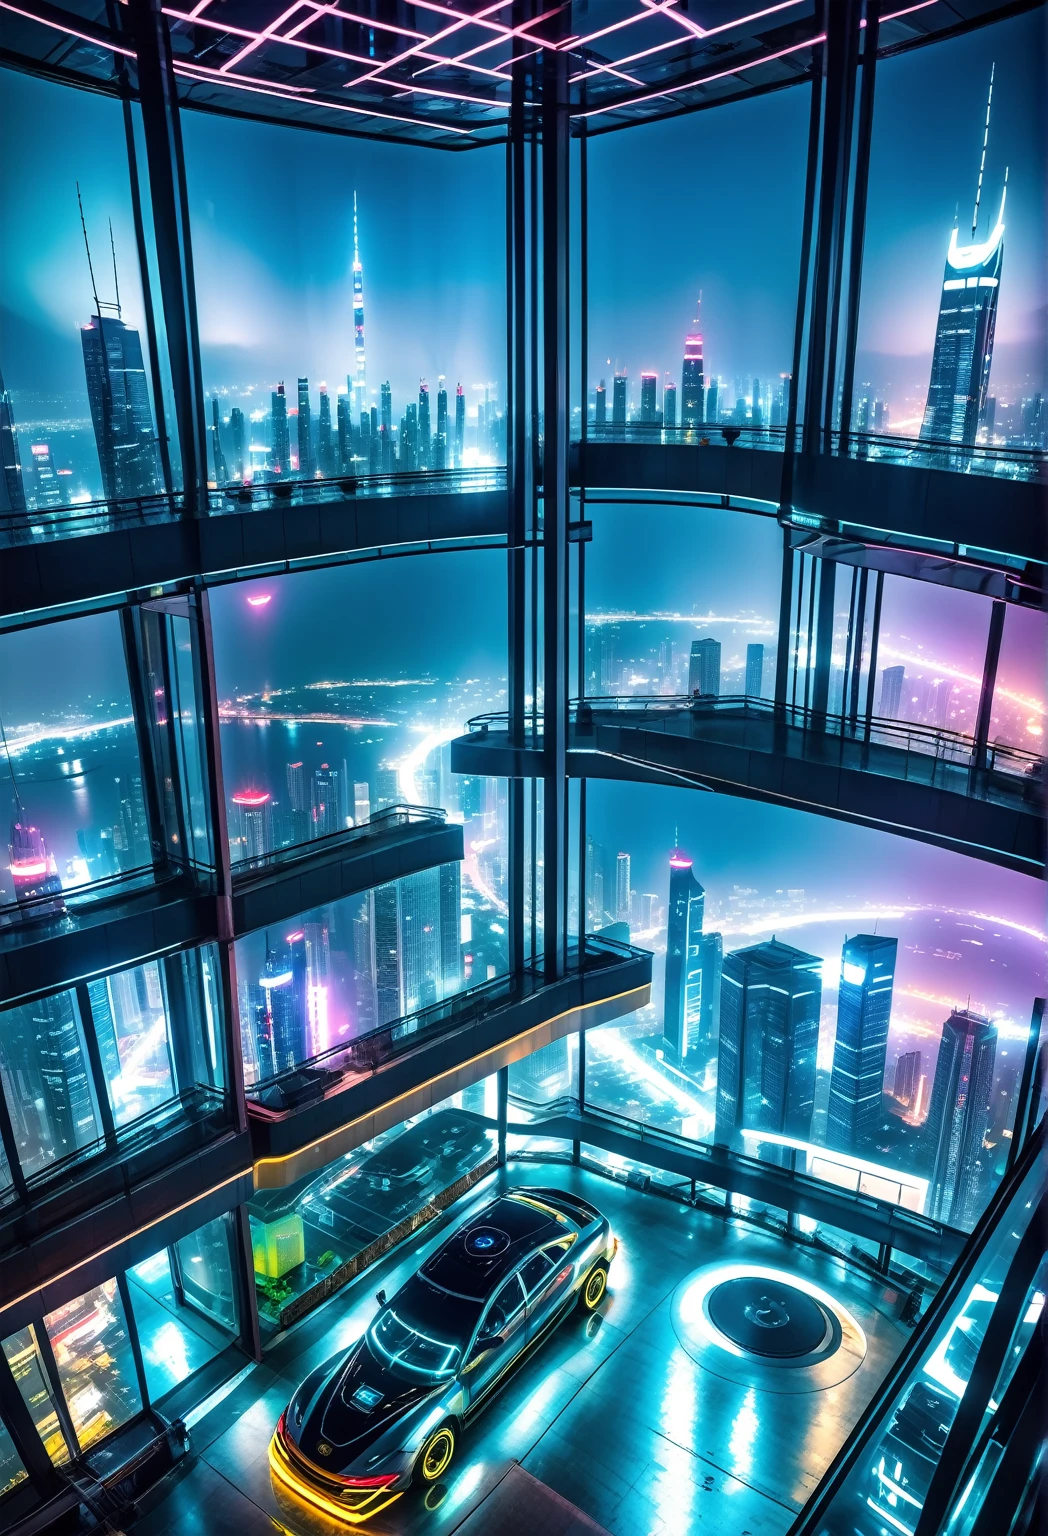 Night panorama from inside a room located on the 90th floor of a skyscraper in a futuristic cyberpunk-style city, se logra apreciar autos voladores, publicidad en luz neon, neblina, pollution.